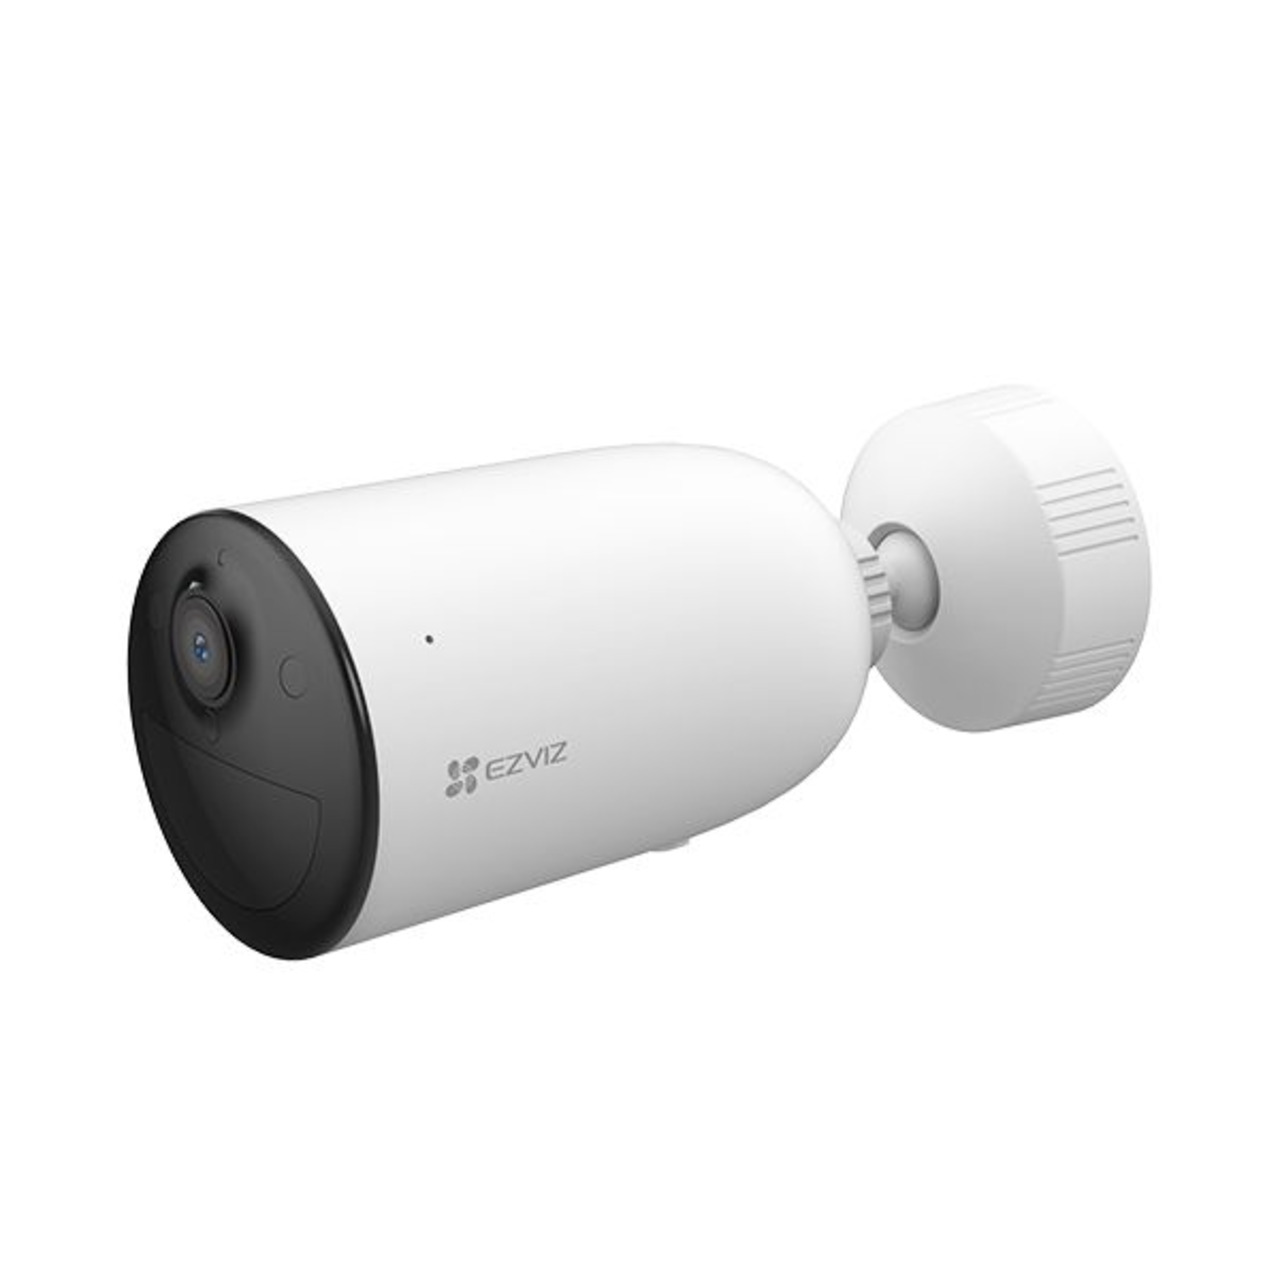 EZVIZ WLAN Outdoor-Akku-berwachungskamera HB3 2K Add-On- fr EZVIZ Halow-Kit- WiFi HaLow unter Sicherheitstechnik